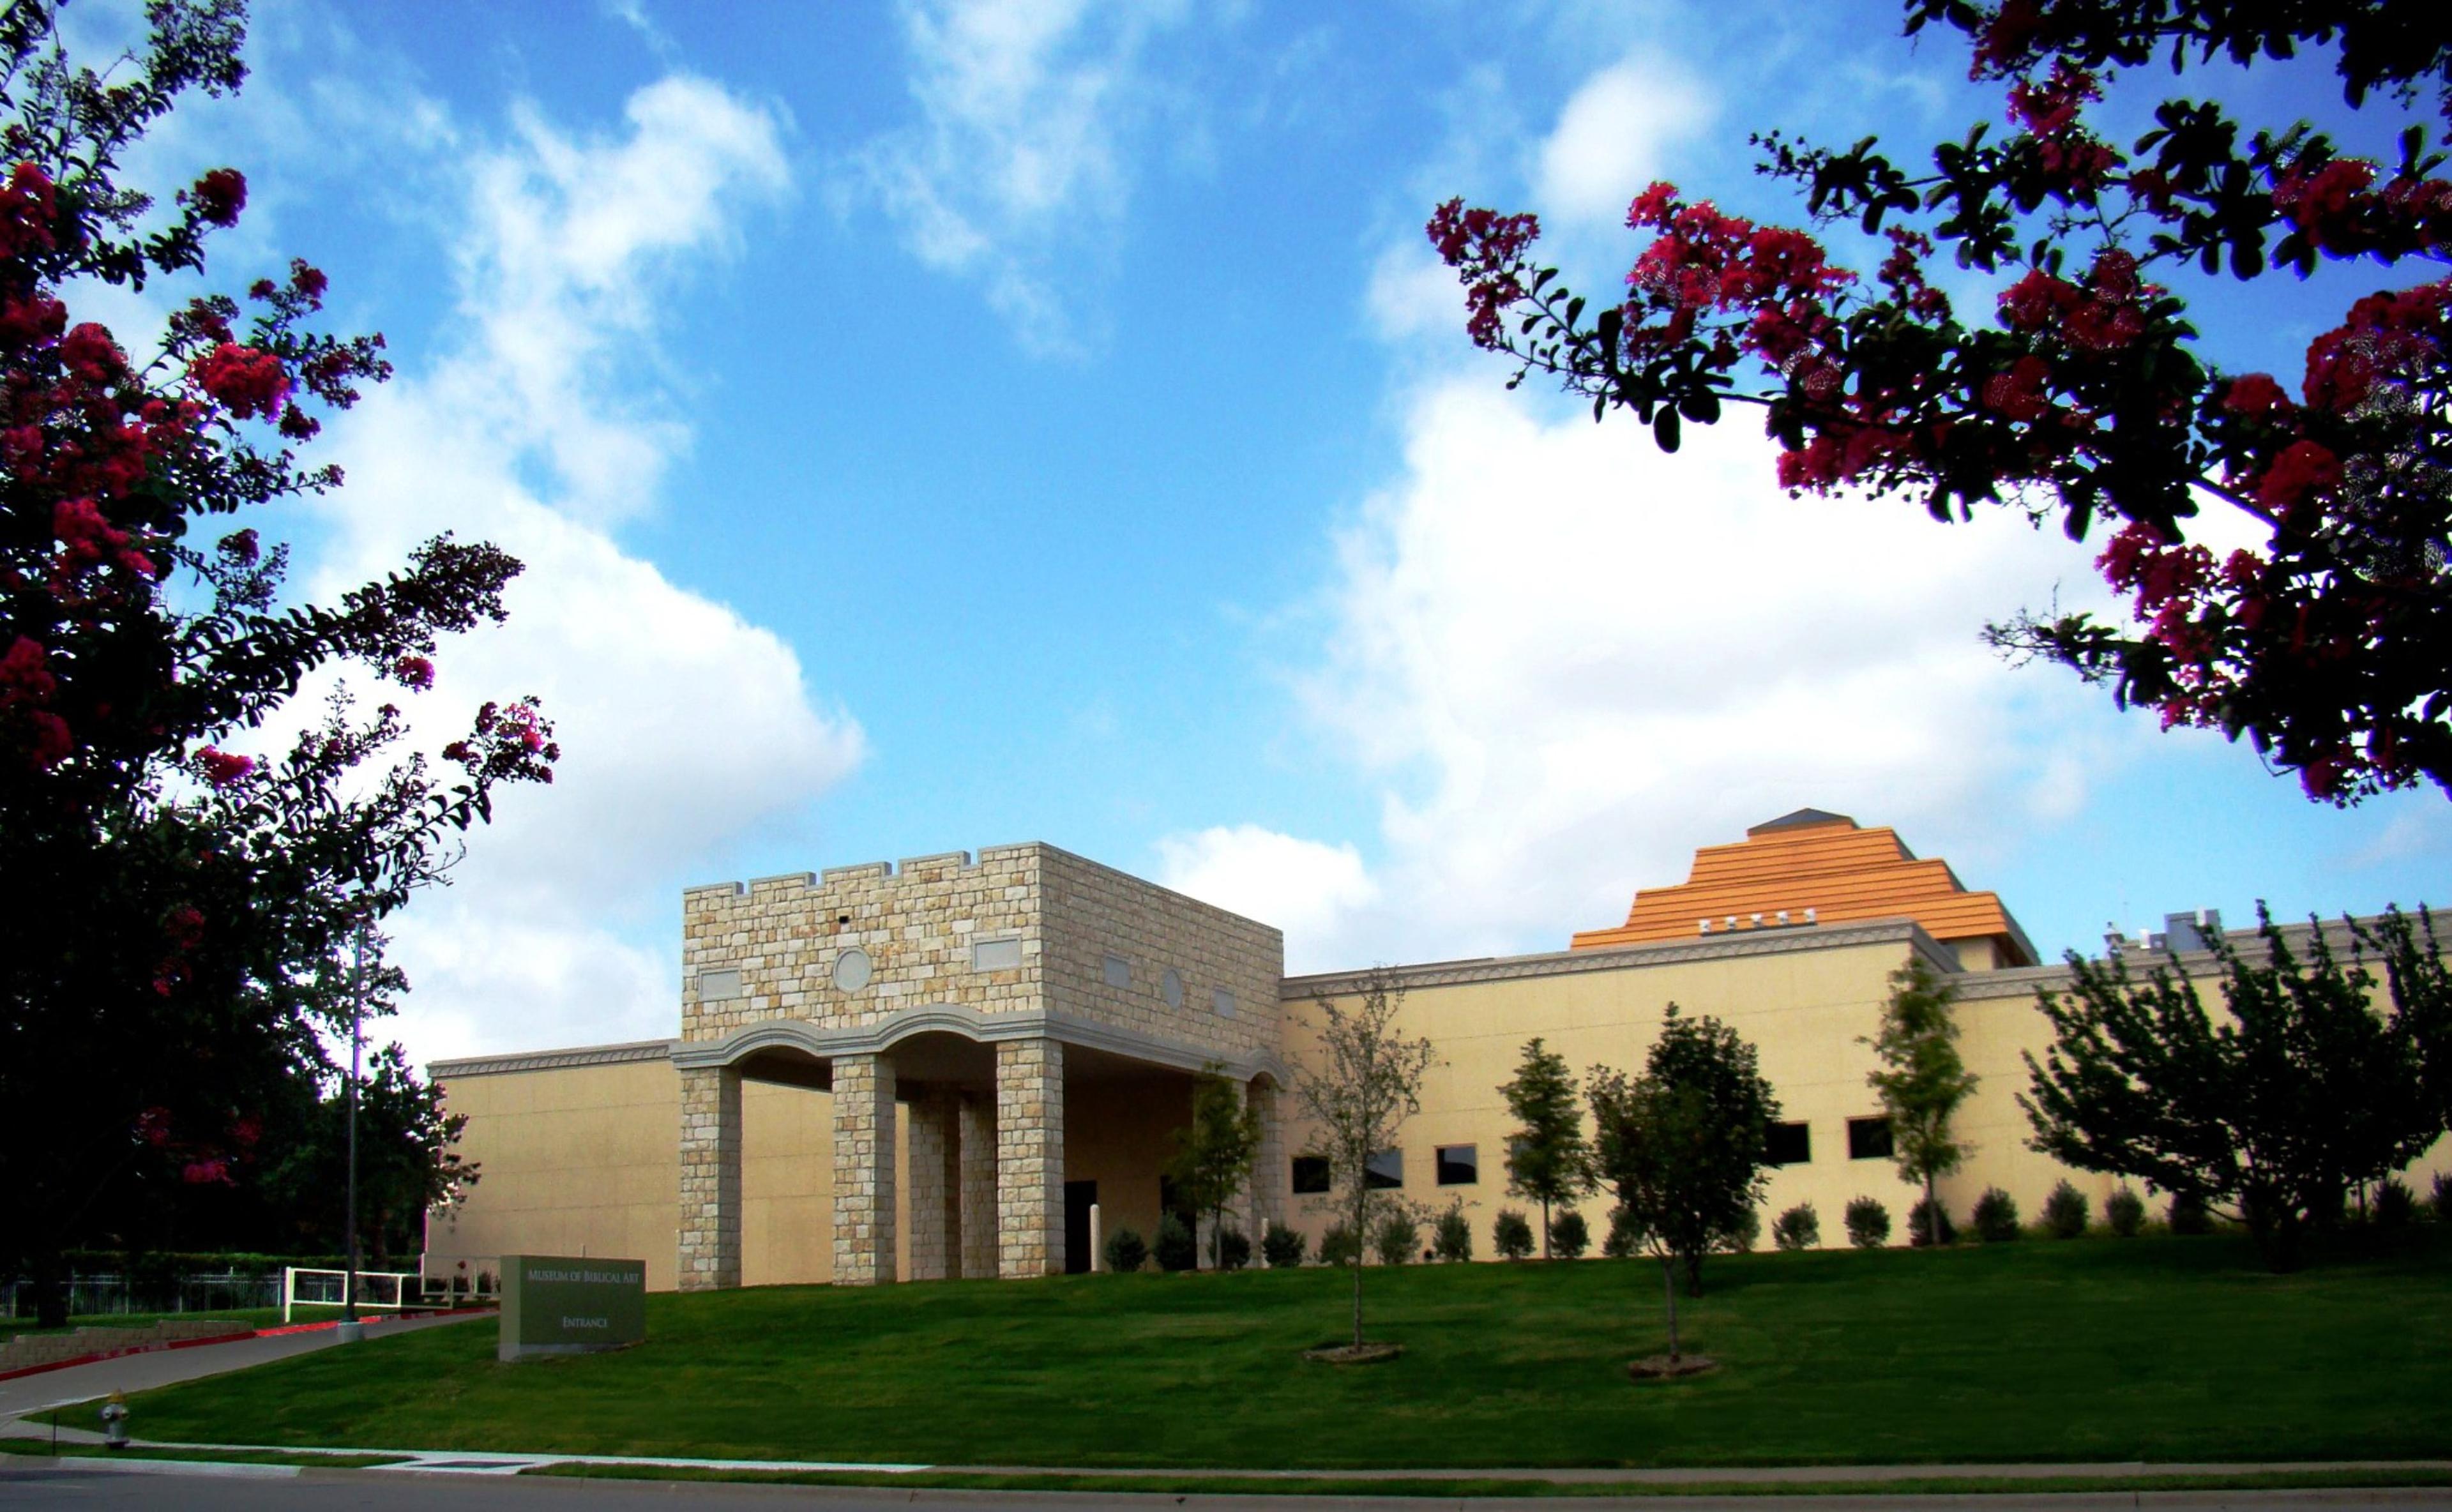 The Museum of Biblical Art